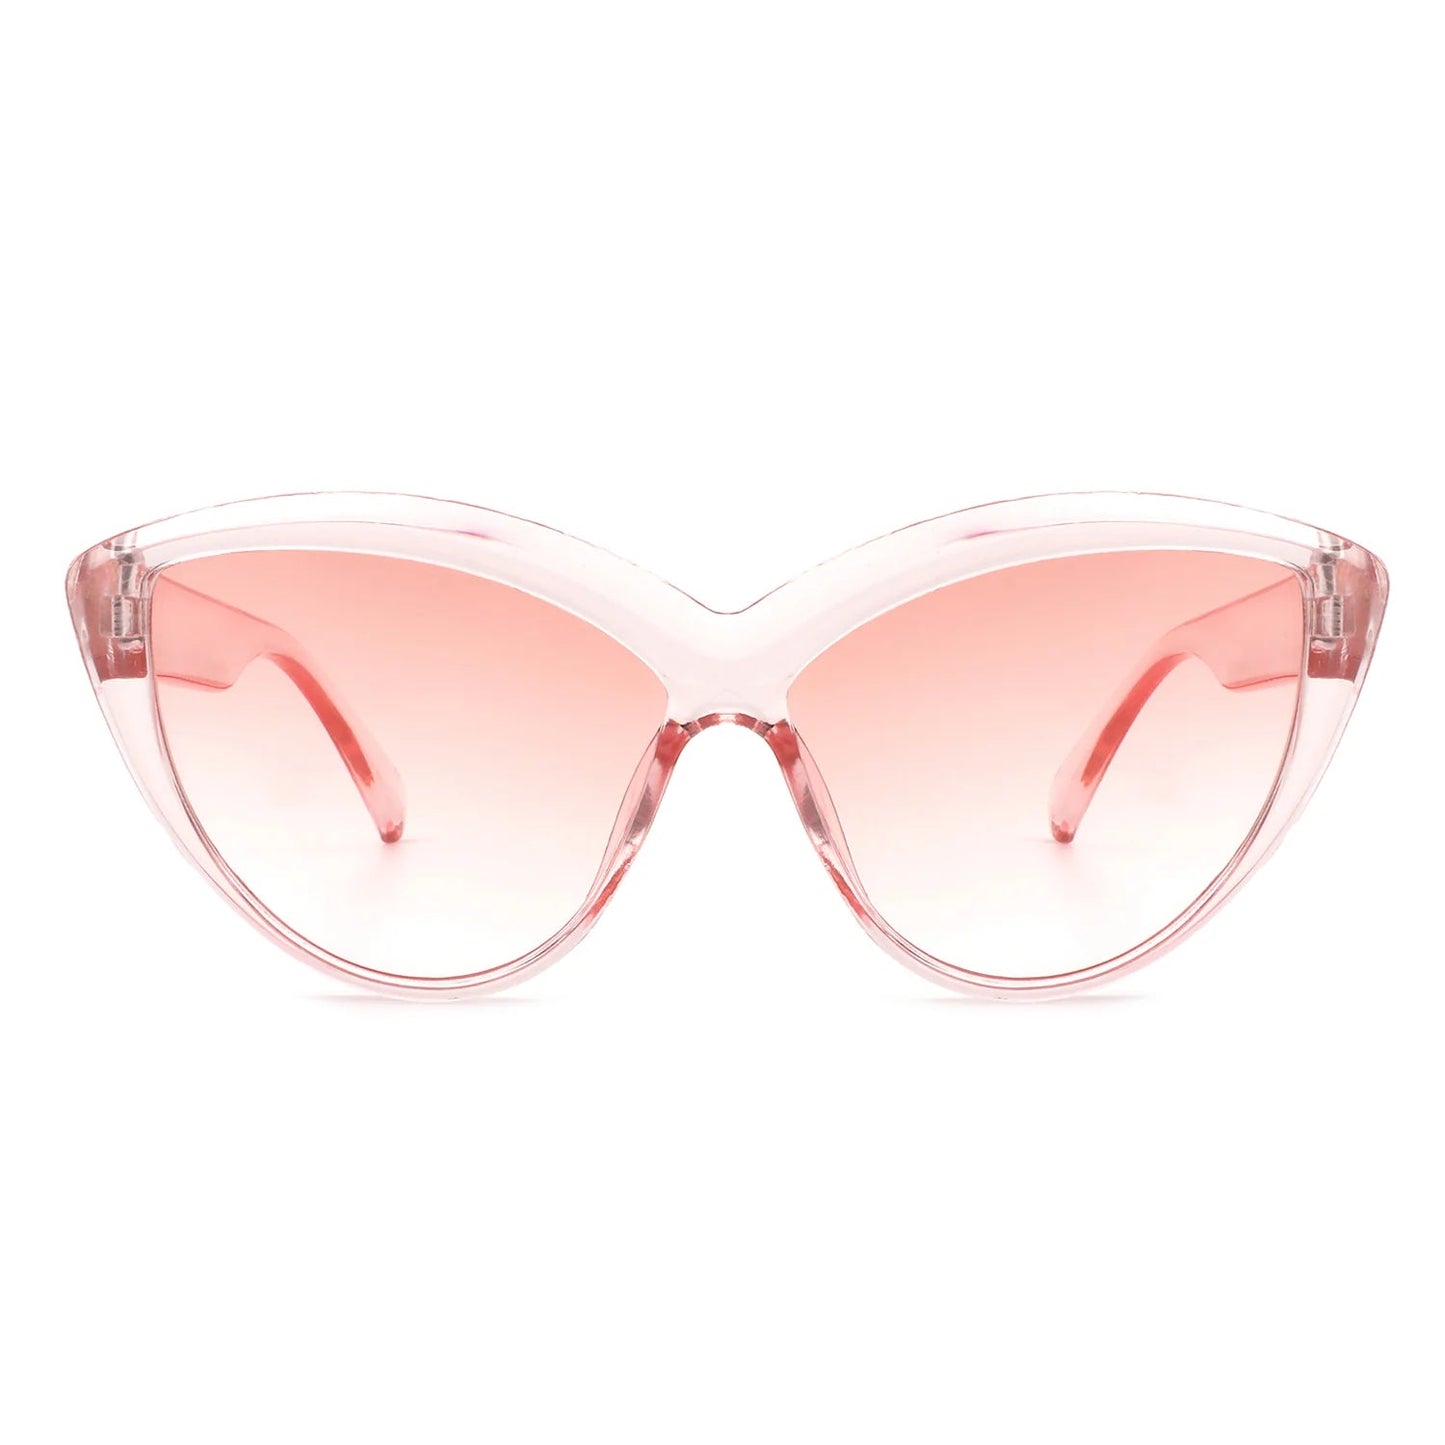 Heliara - Women Oversize Large Cat Eye Fashion Sunglasses